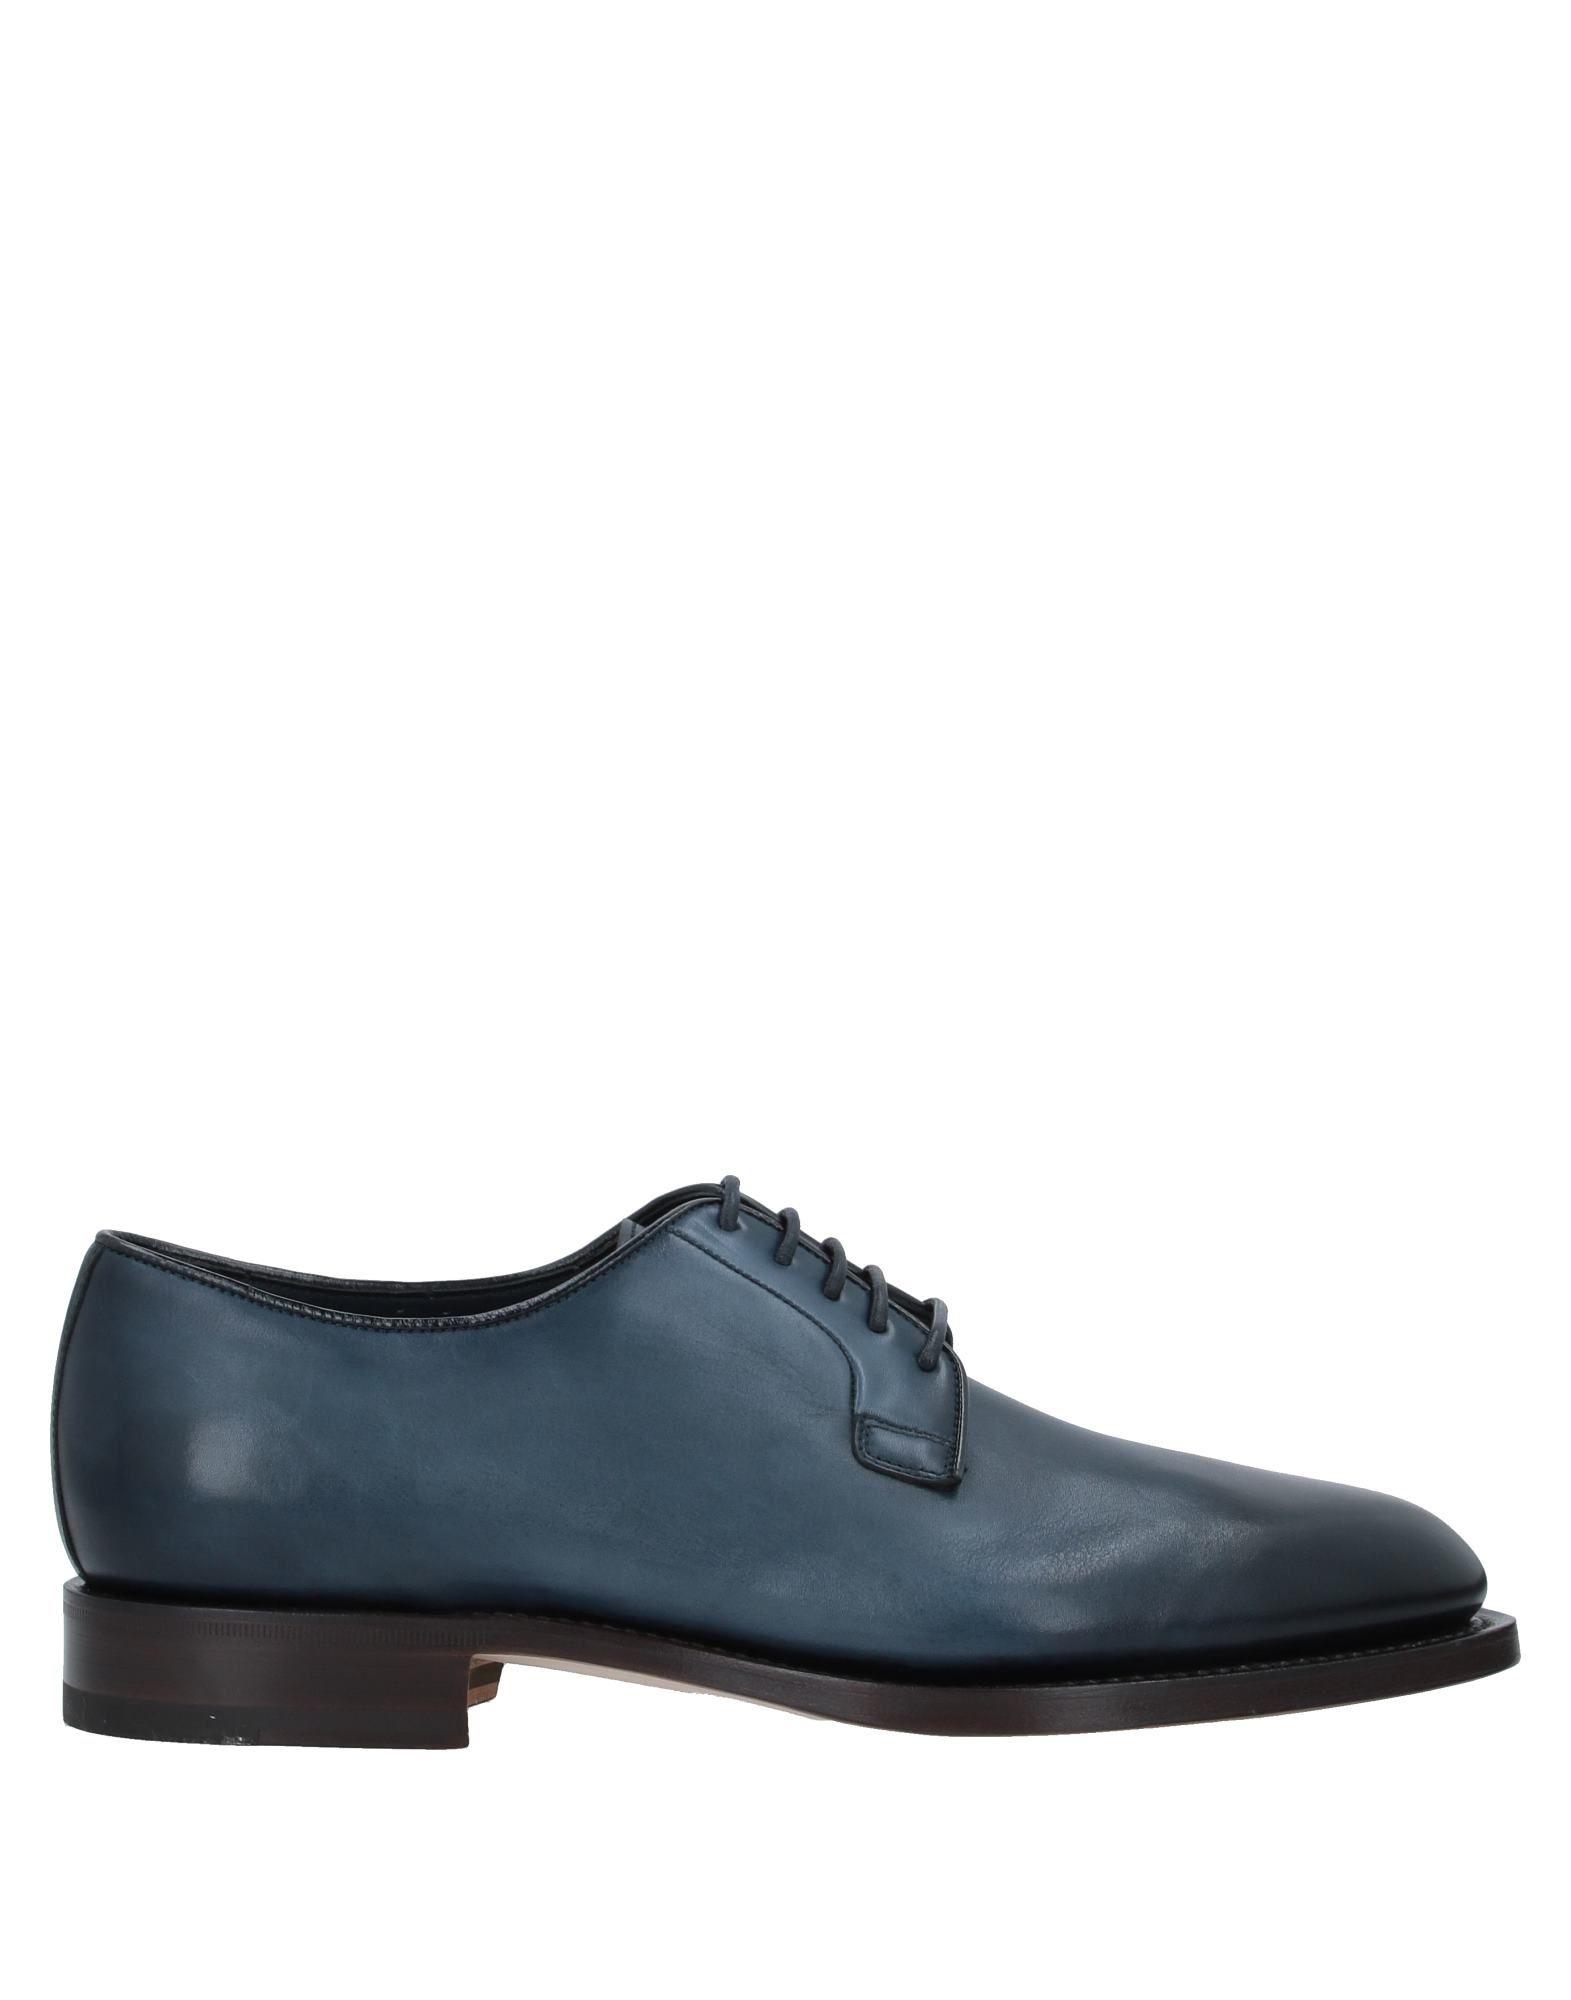 Santoni Leather Lace-up Shoe in Dark Blue (Blue) for Men - Lyst